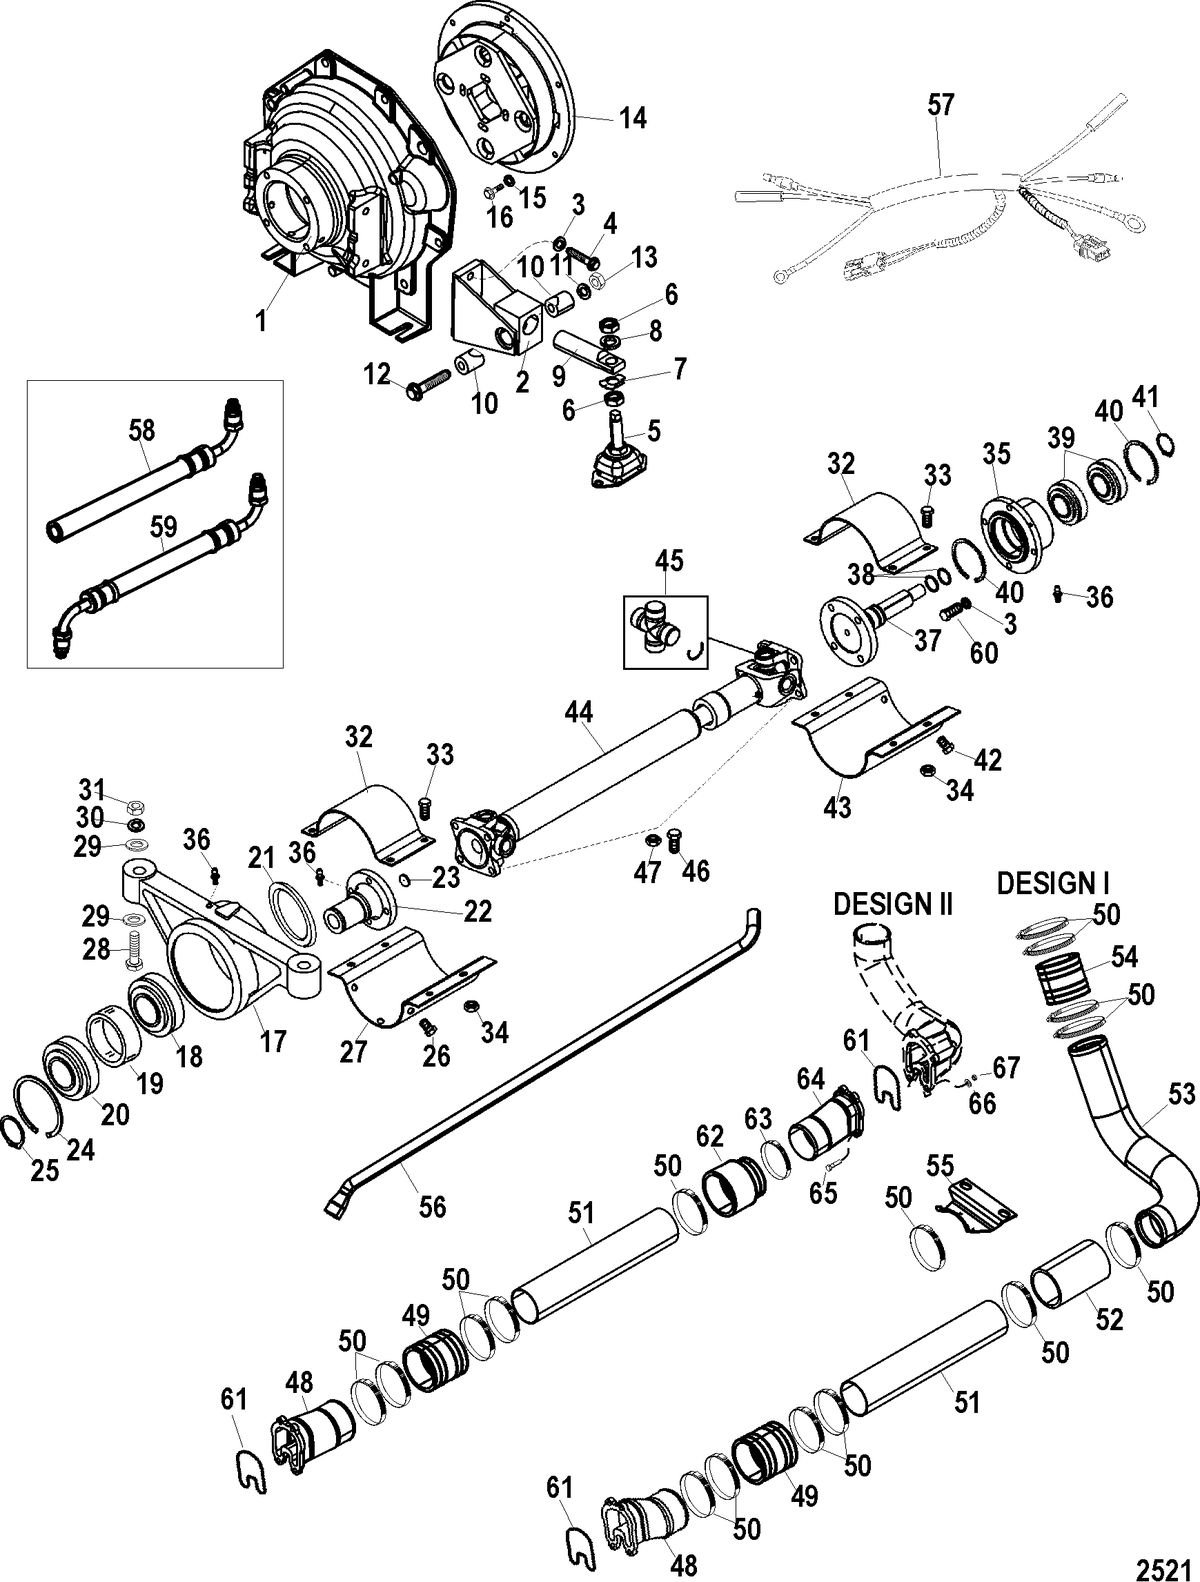 MERCRUISER CUMMINS/MERCRUSER DIESEL 1.7L-120 Jackshaft Components